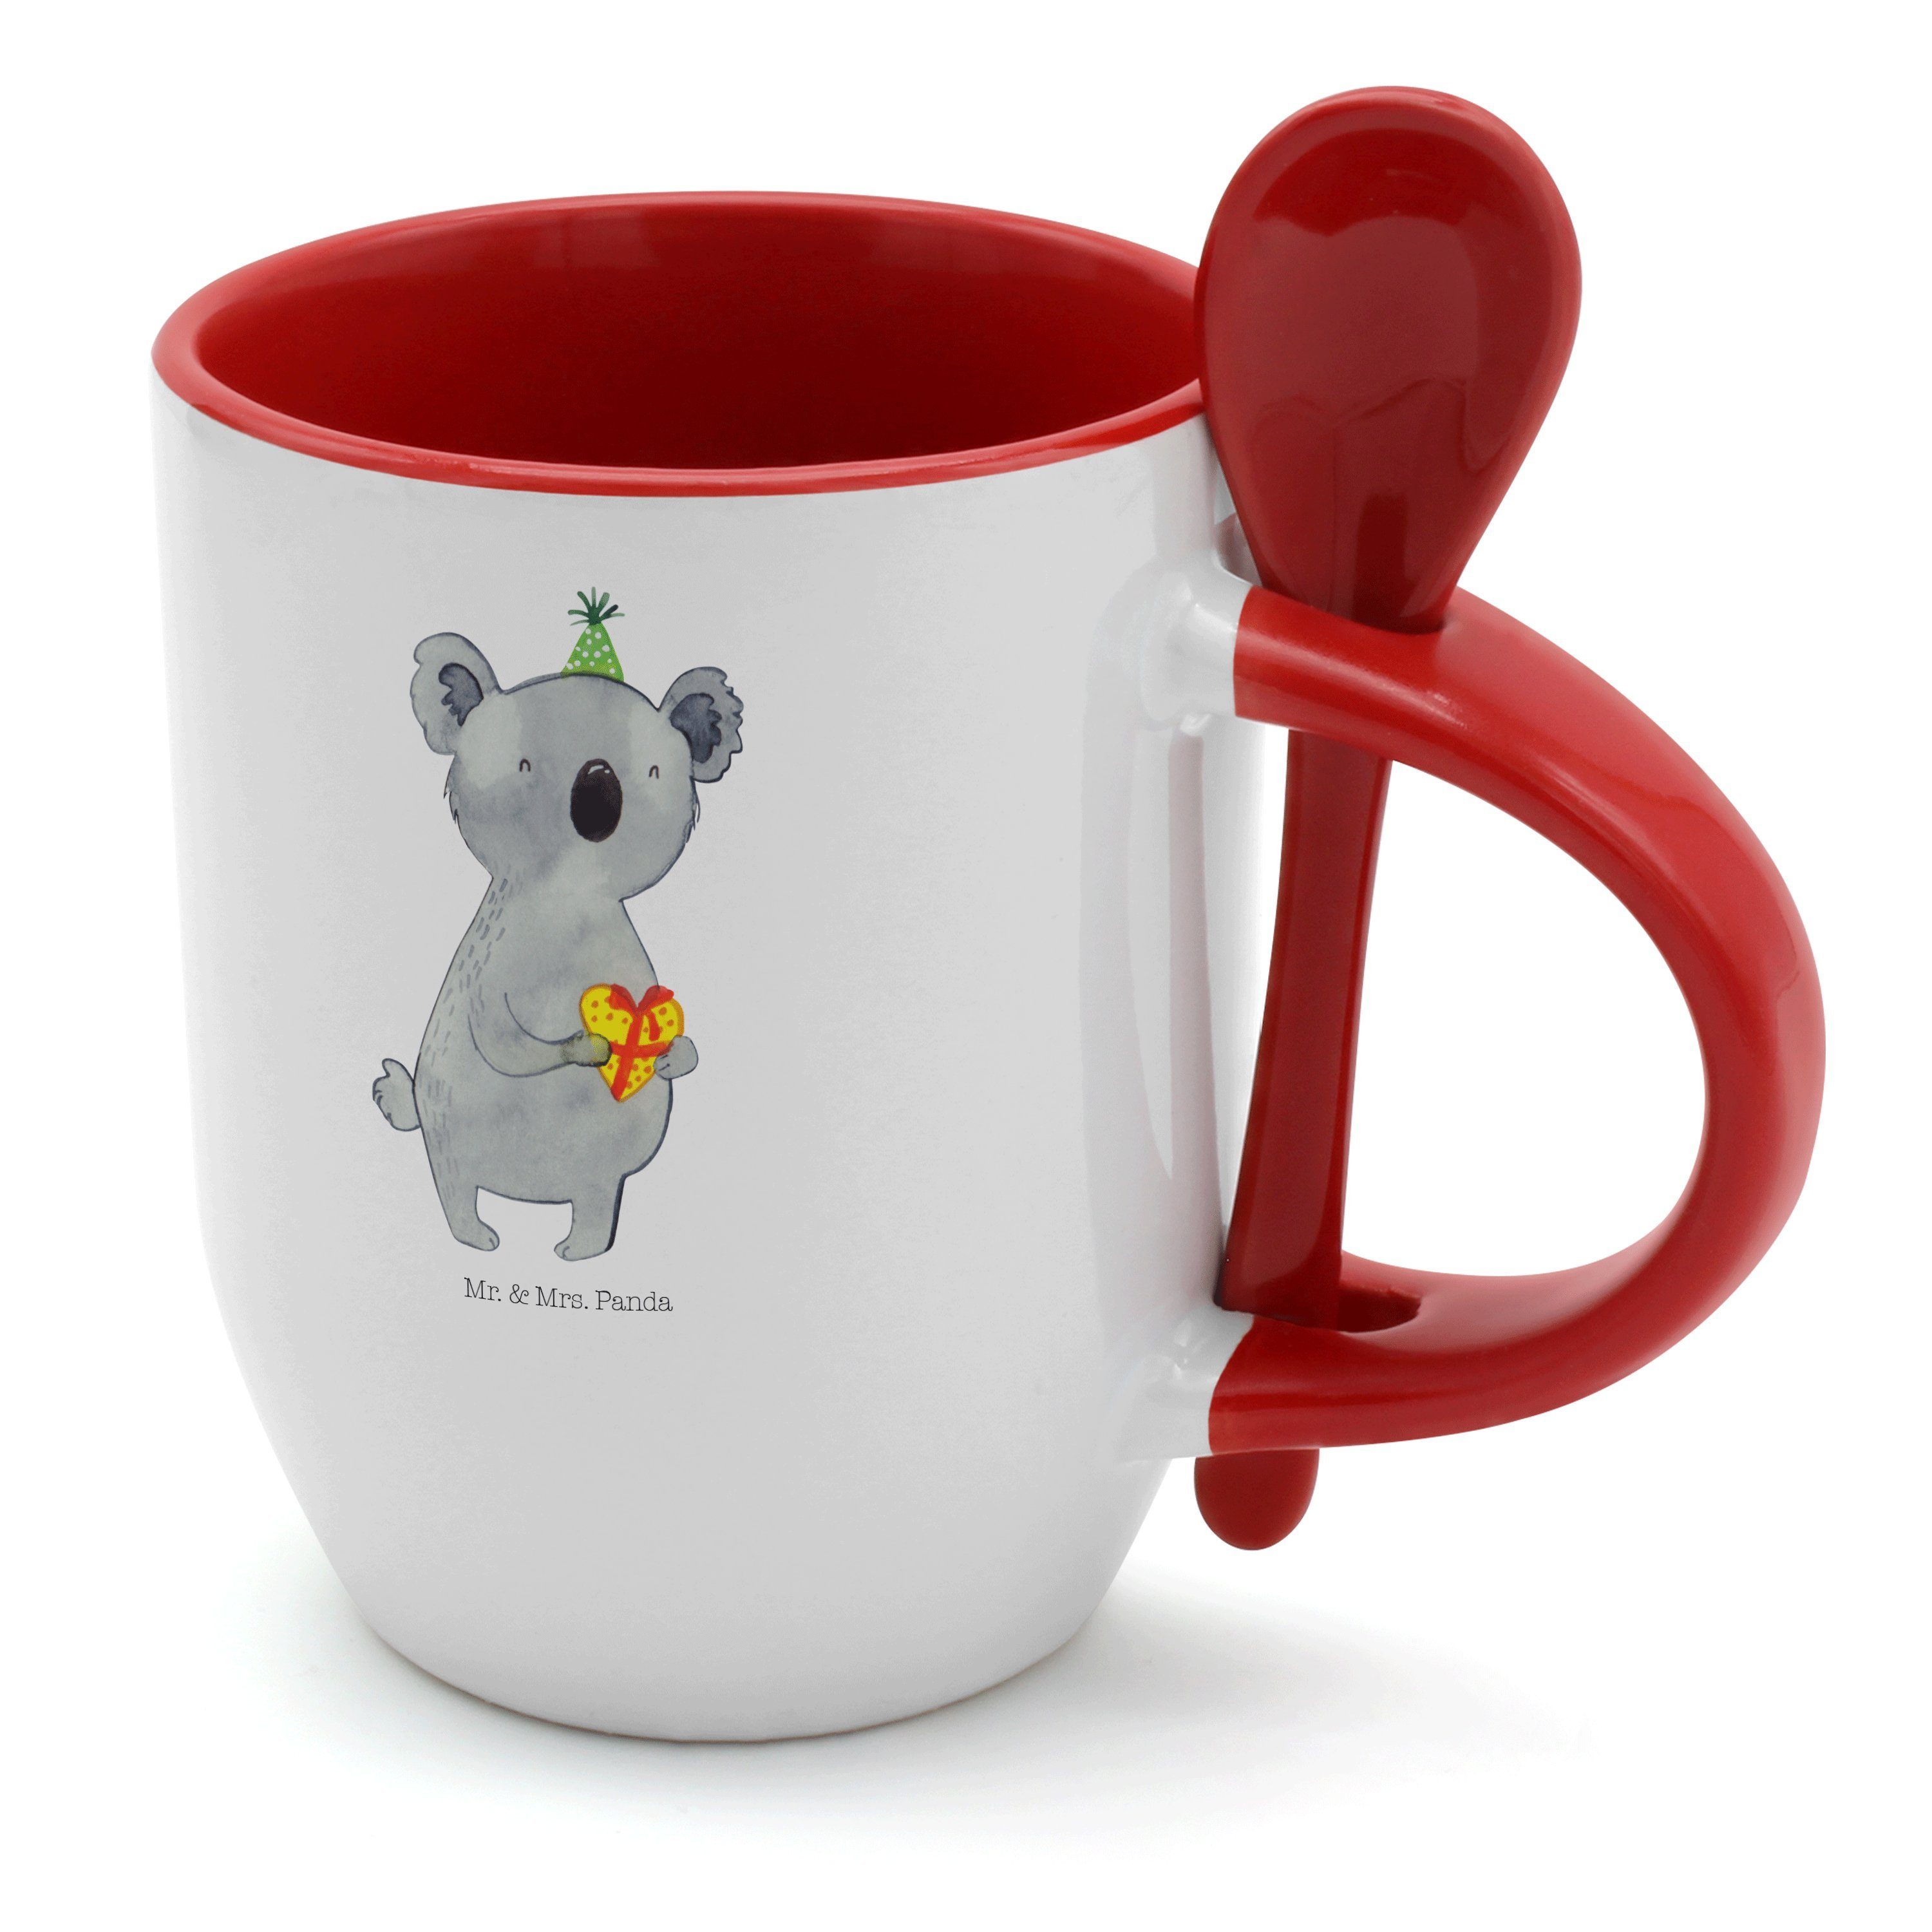 Mr. & Mrs. Panda Tasse Koala Geschenk - Weiß - Geburtstag, Tassen, Party, Koalabär, Tasse, T, Keramik